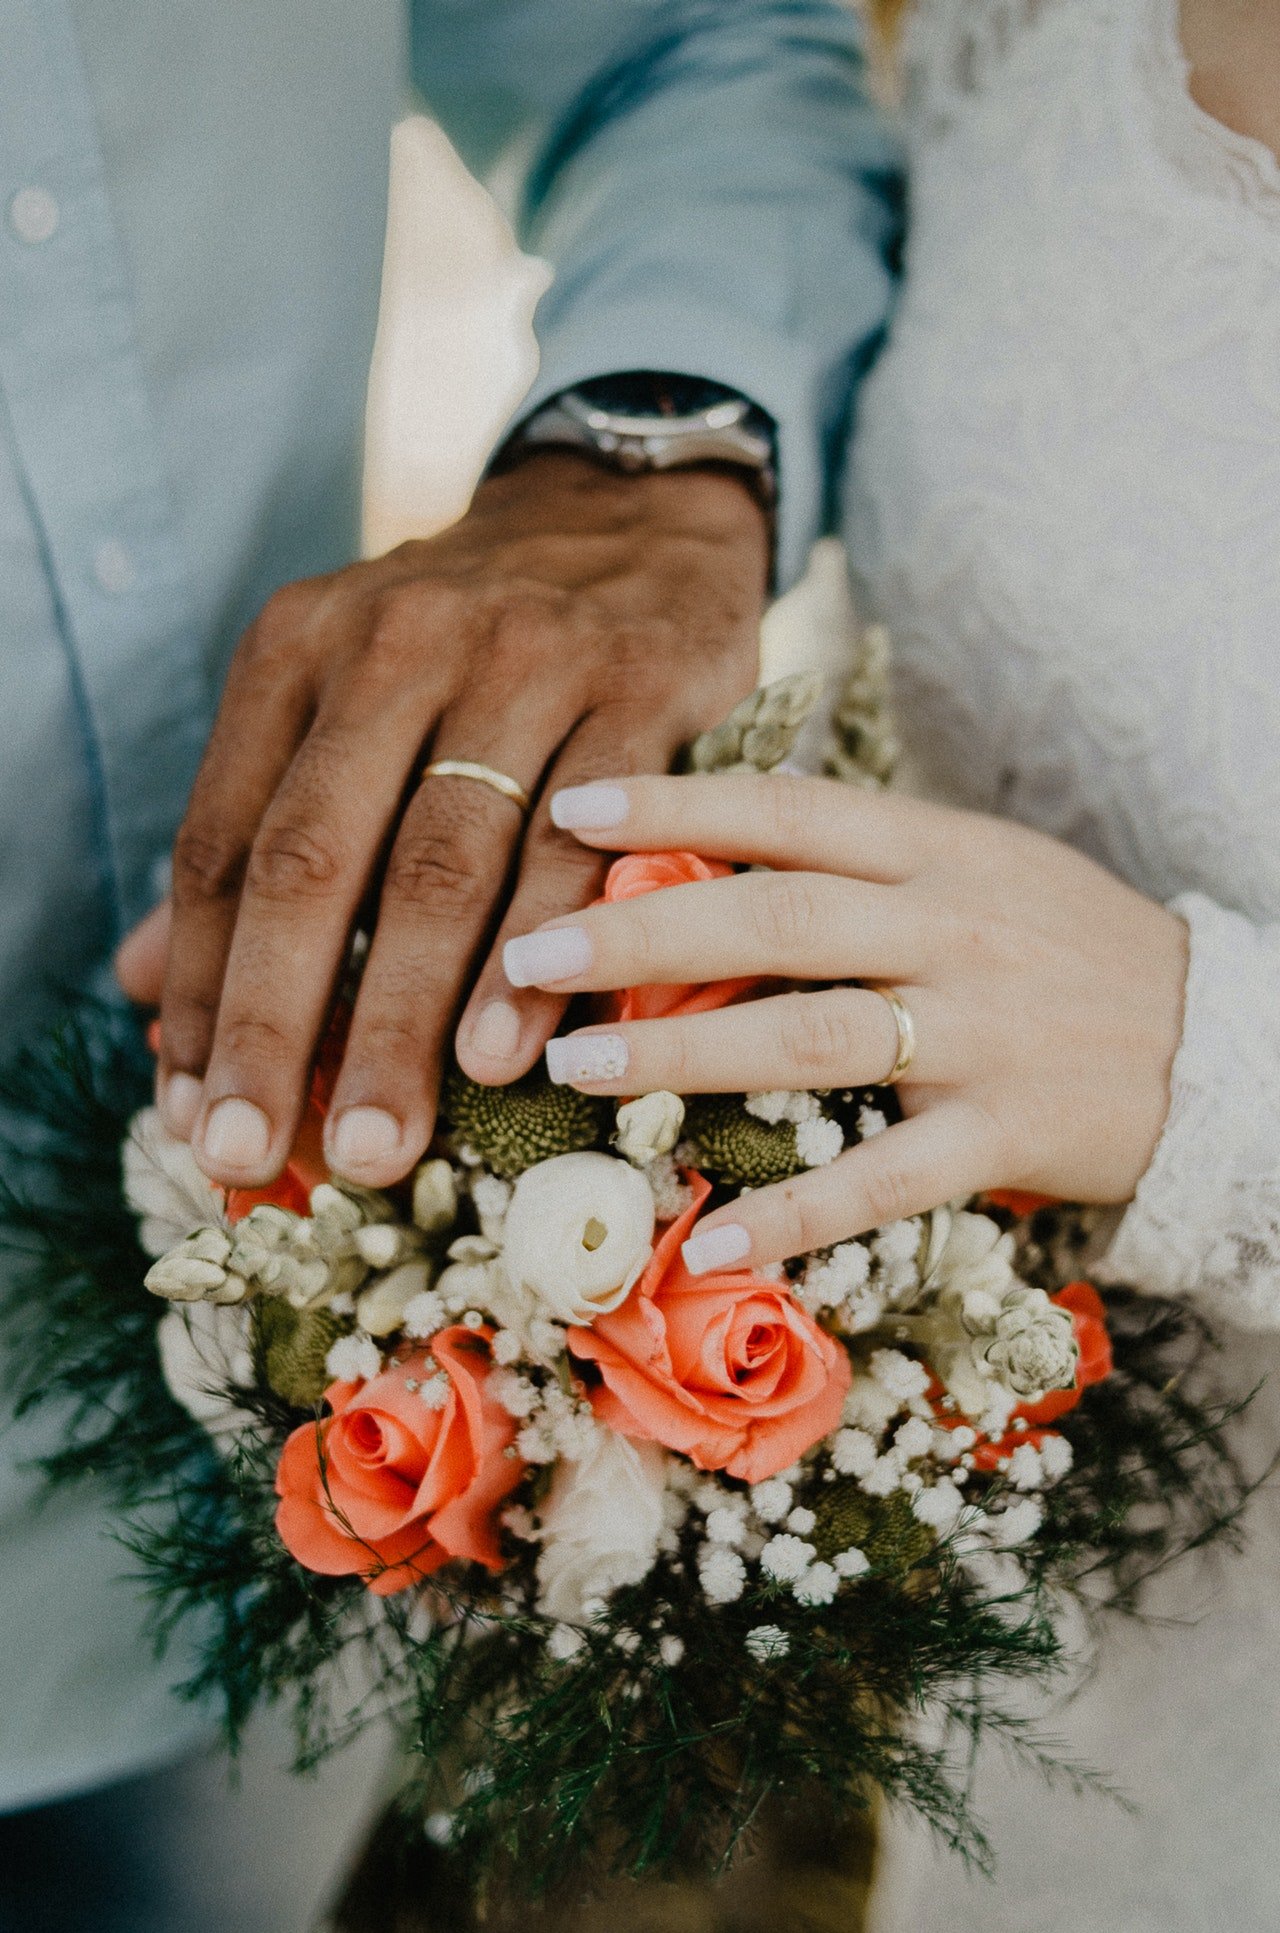 Bride and groom holding hands | Source: Pexels